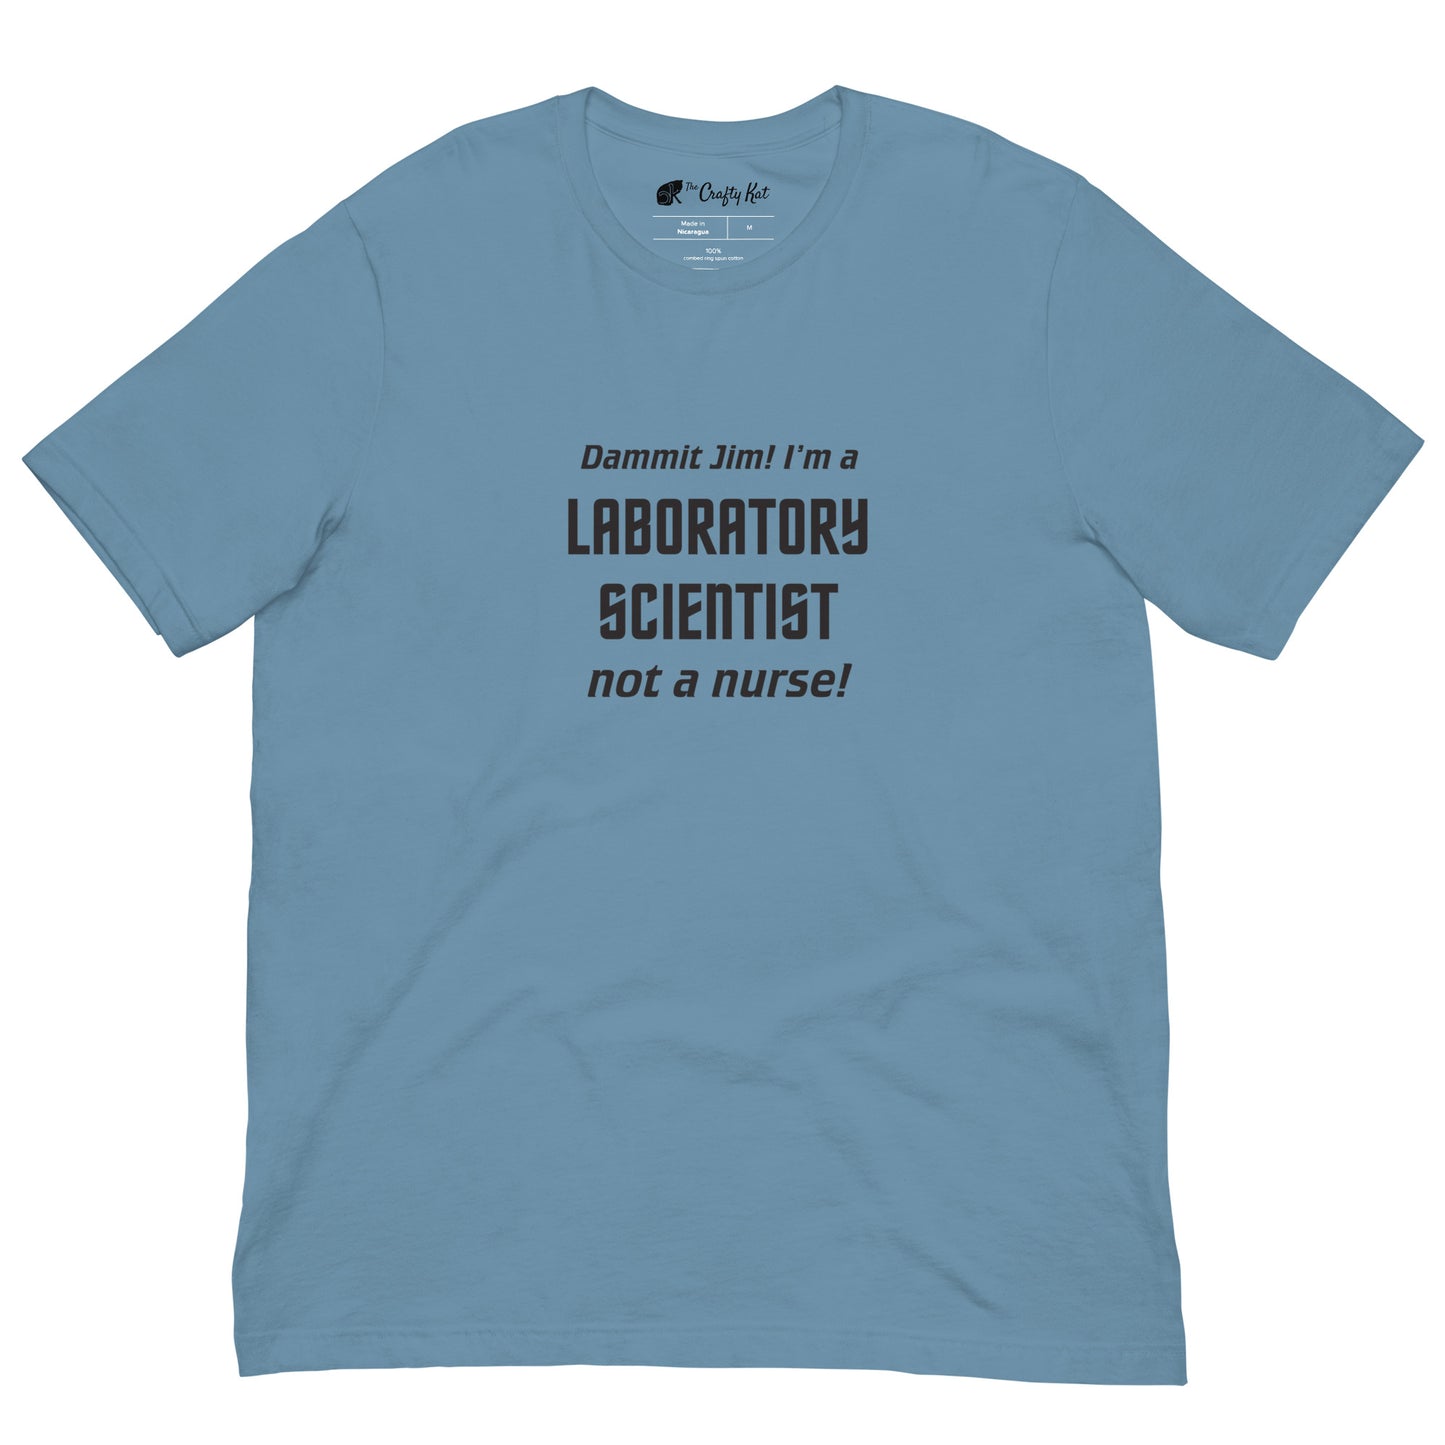 Steel Blue t-shirt with text graphic in Star Trek font: "Dammit Jim! I'm a LABORATORY SCIENTIST not a nurse!"